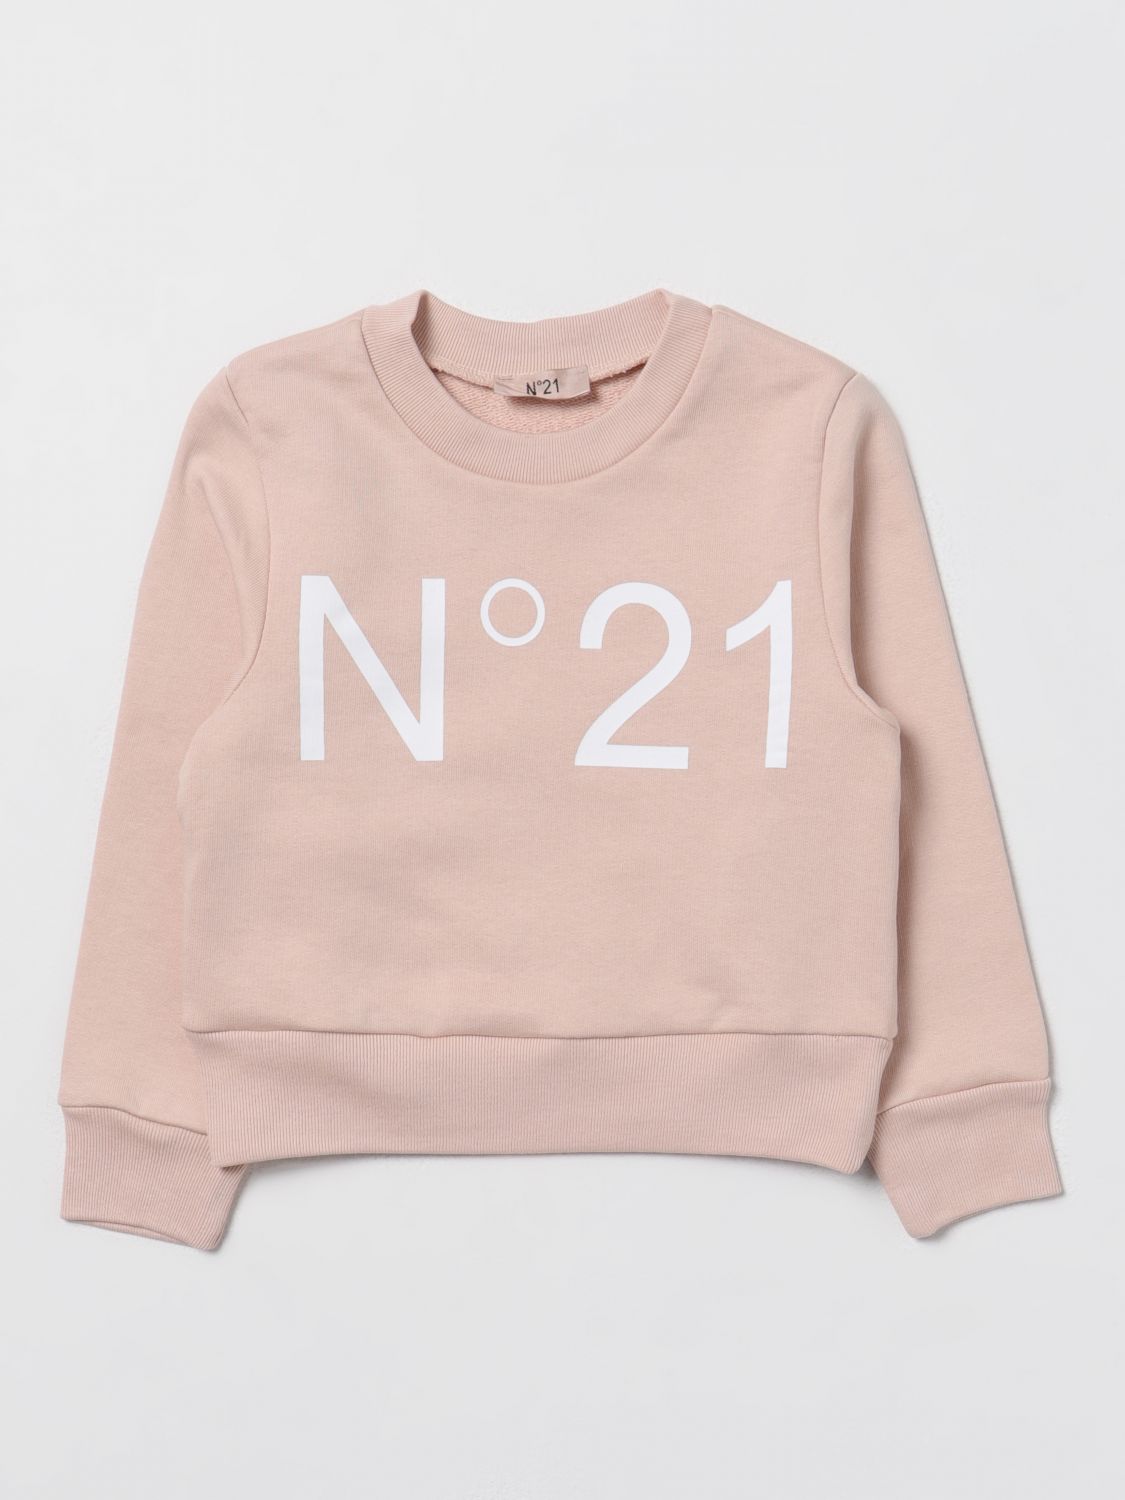 Shop N°21 Sweater N° 21 Kids Color Blush Pink